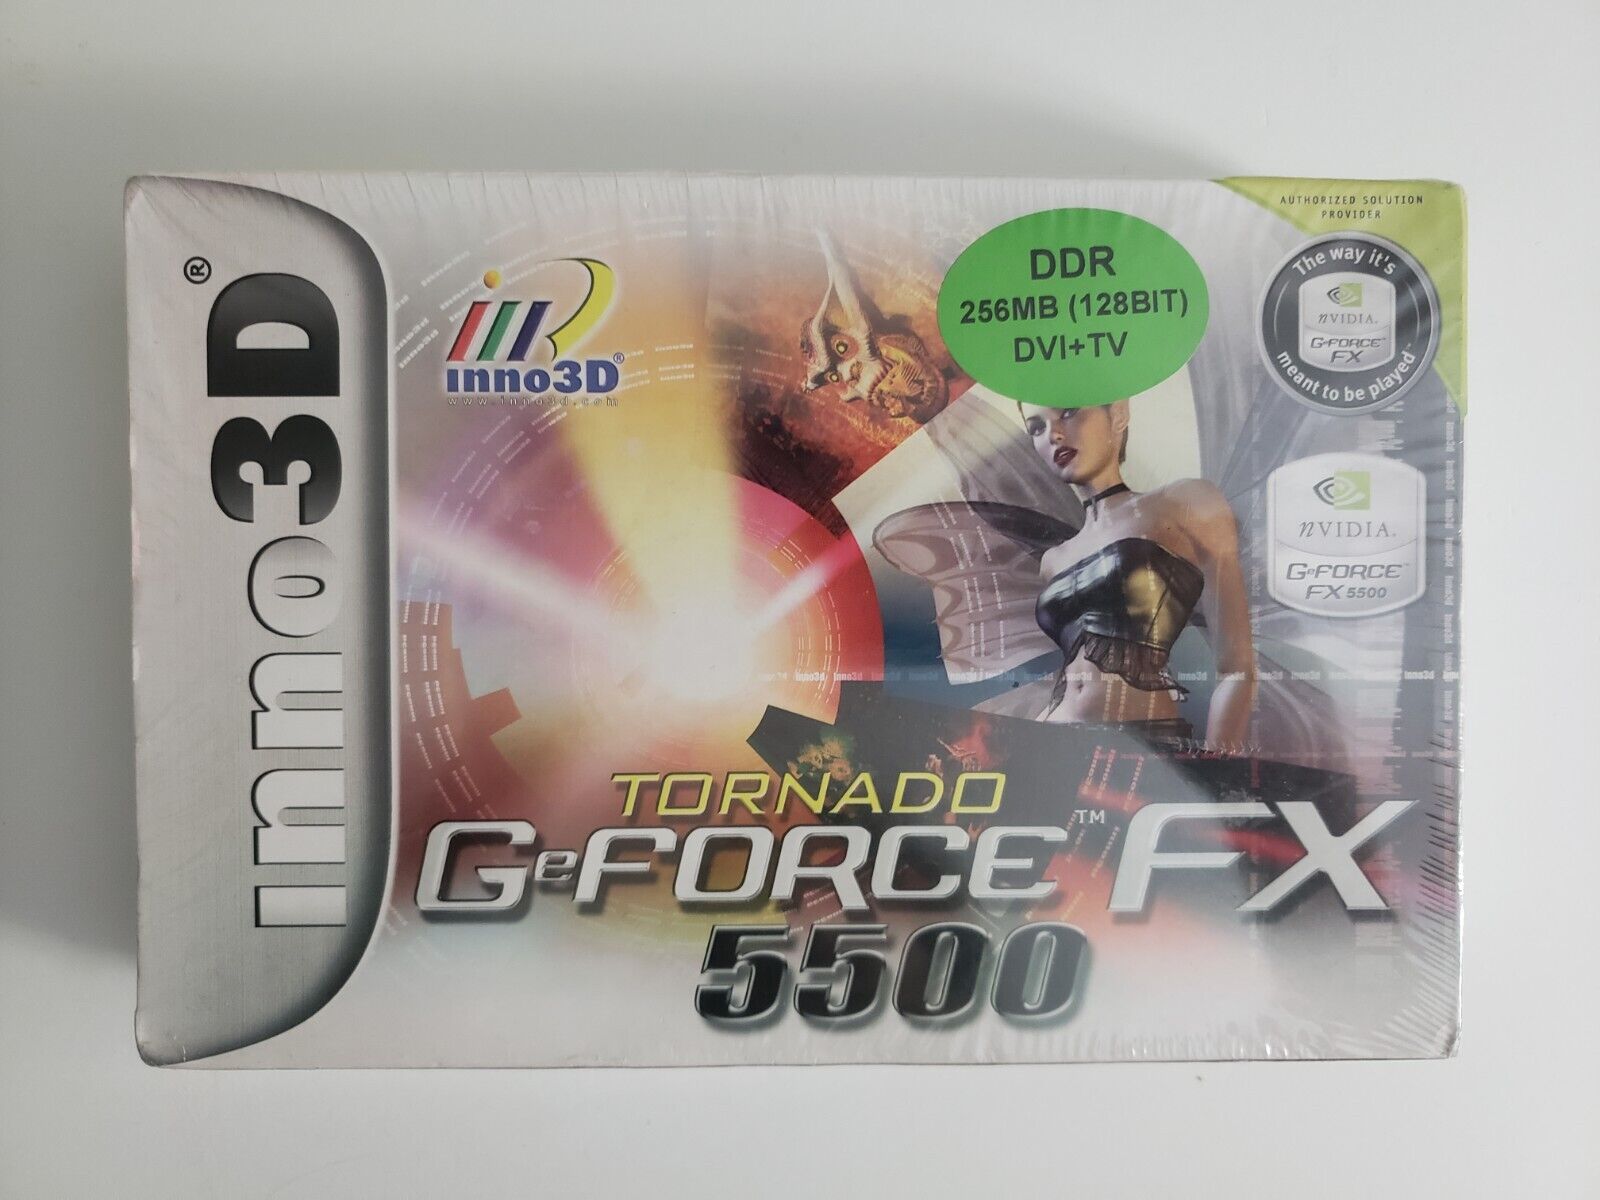 Inno 3D Tornado G-Force FX 5500 DDR 256MB DVI + TV Graphics Card [NEW, SEALED]